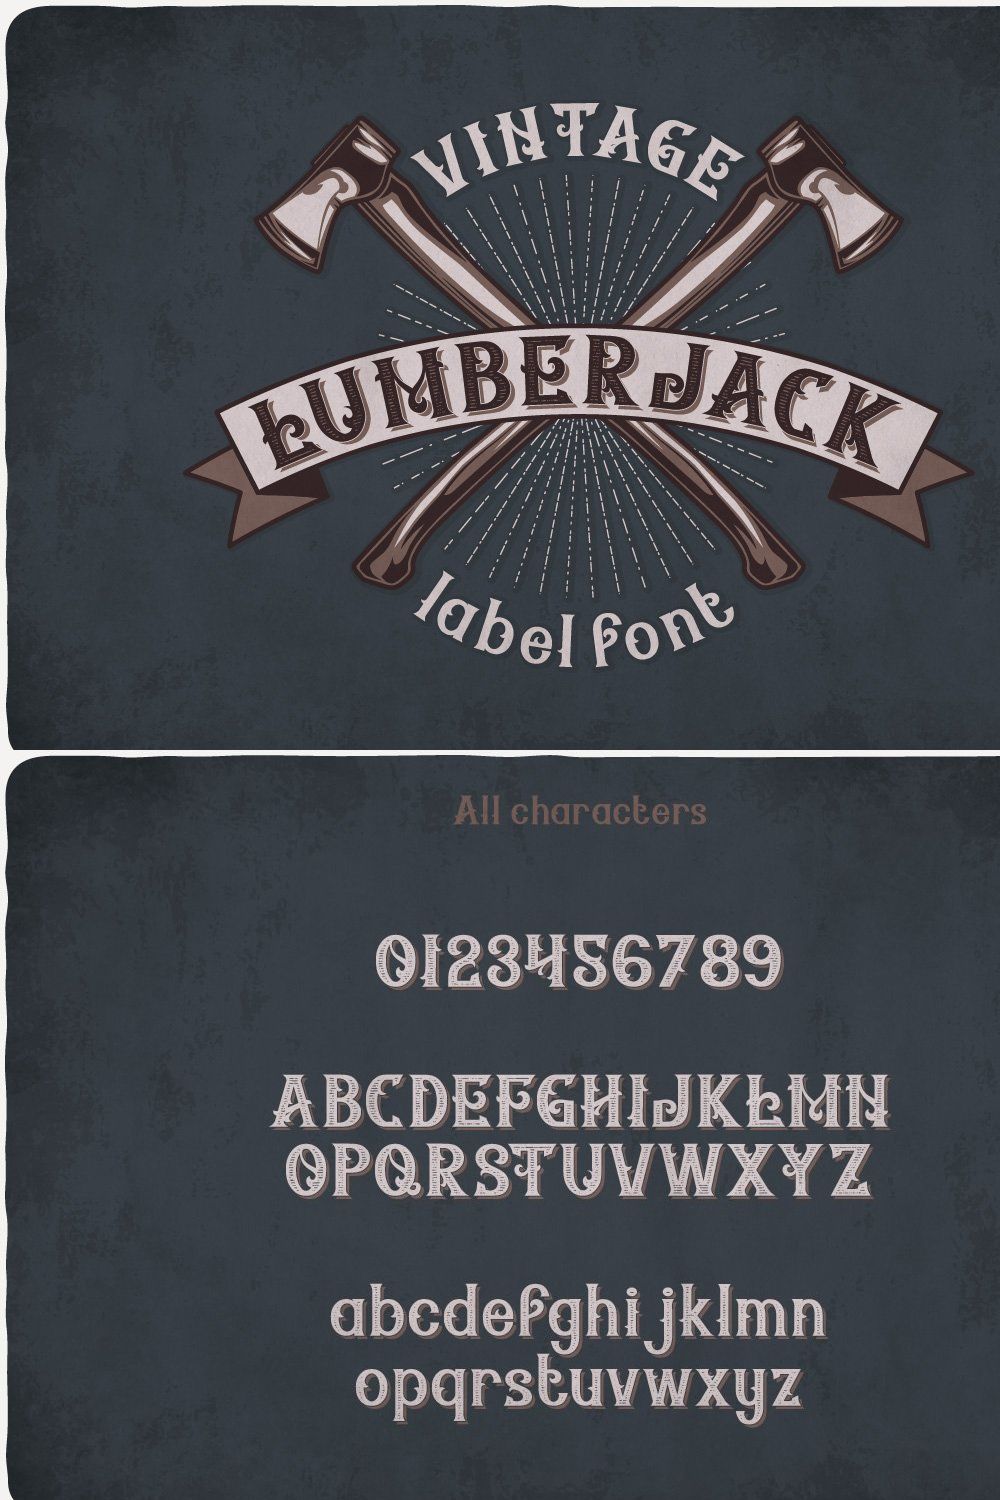 Lumberjack Typeface pinterest preview image.